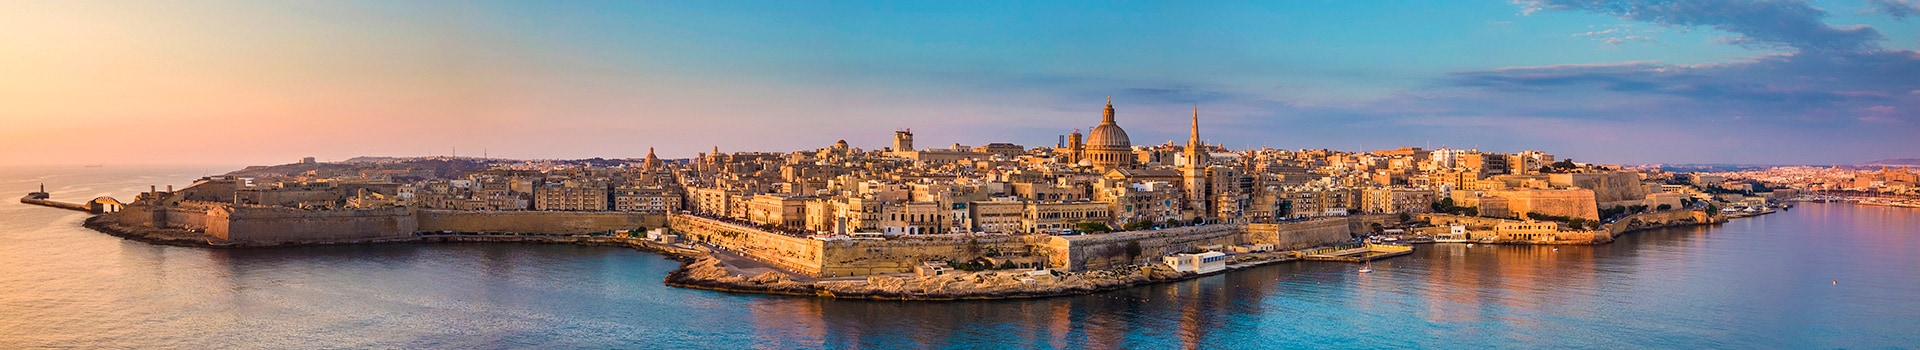 Catania - Malta